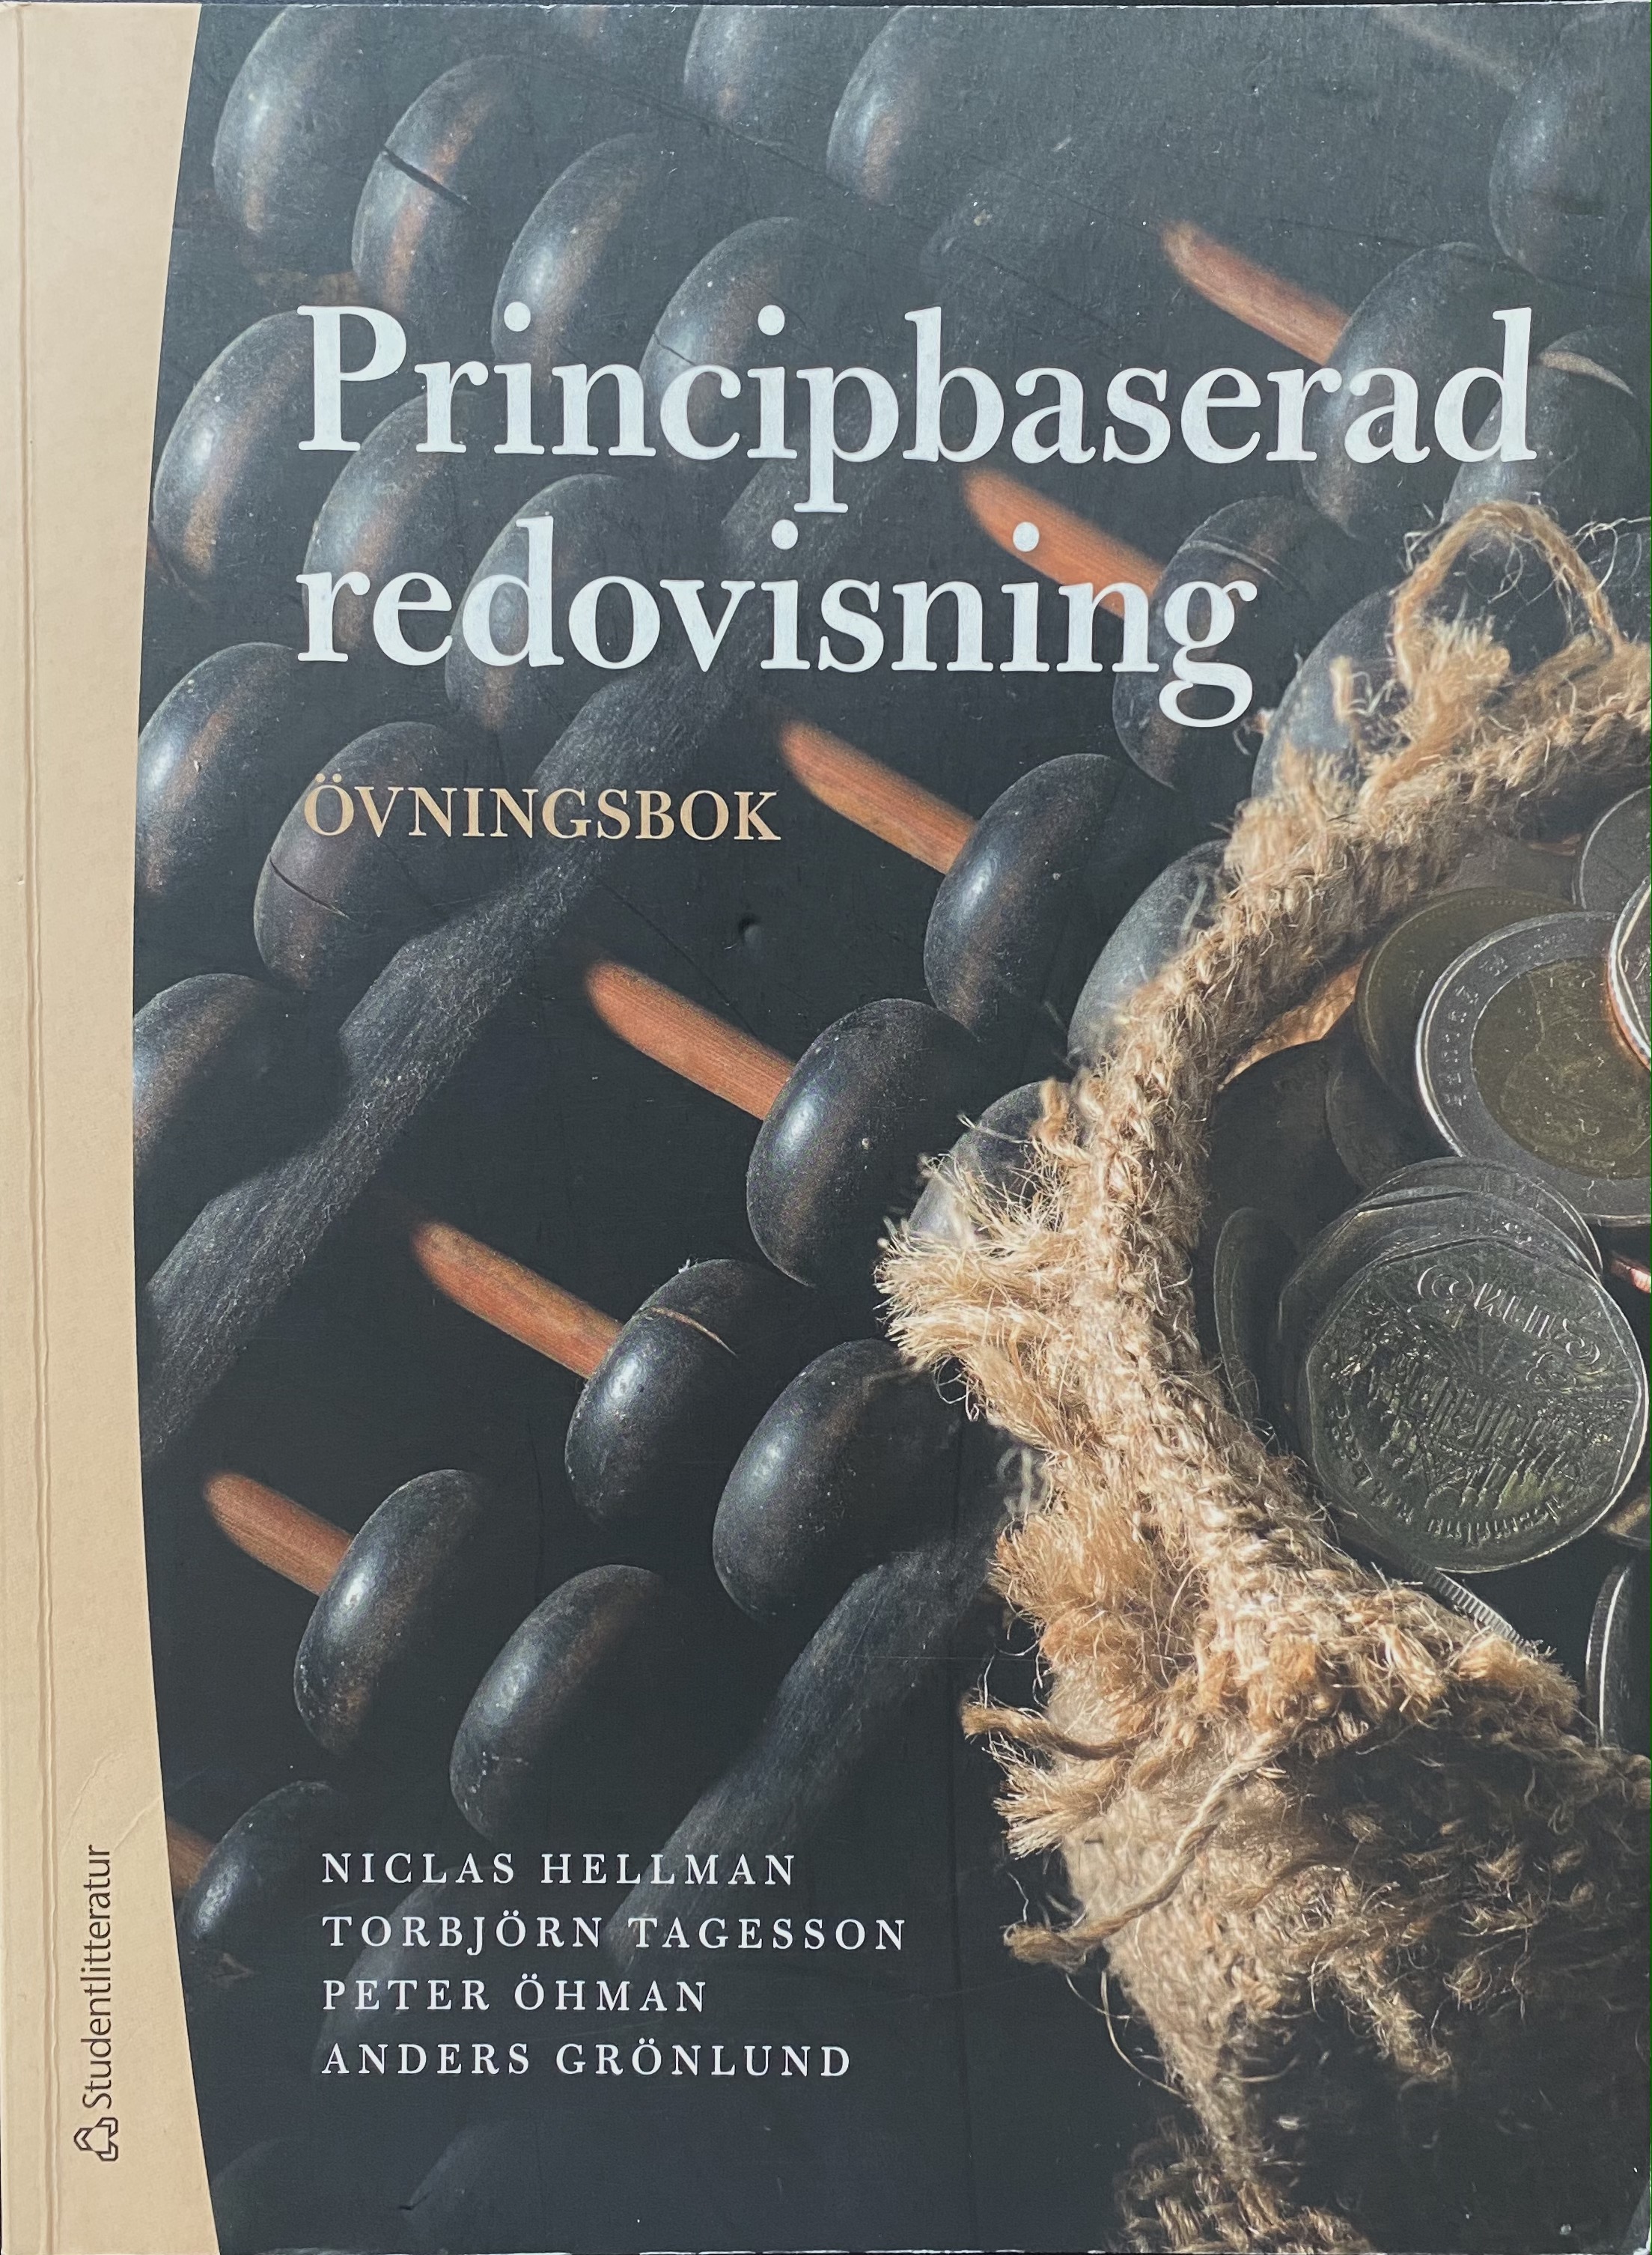 Principbaserad redovisning - Övningsbok; Anders Grönlund, Torbjörn Tagesson; 2019